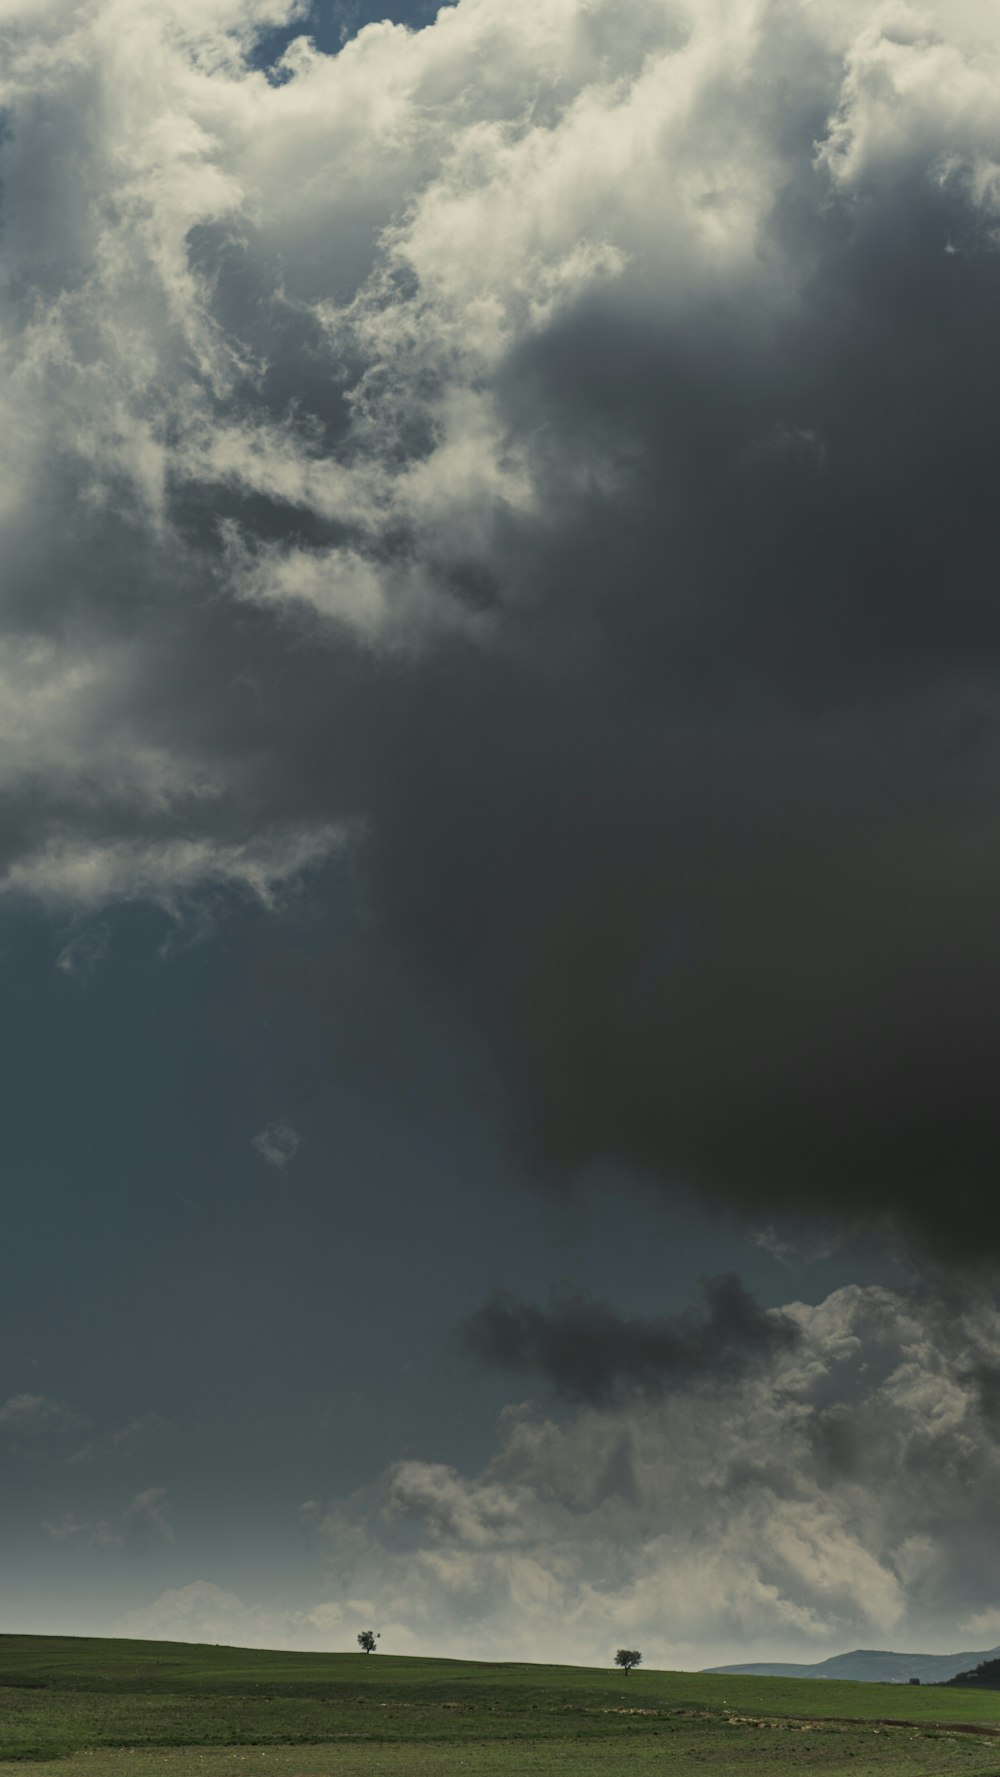 a lone horse standing in a field under a cloudy sky